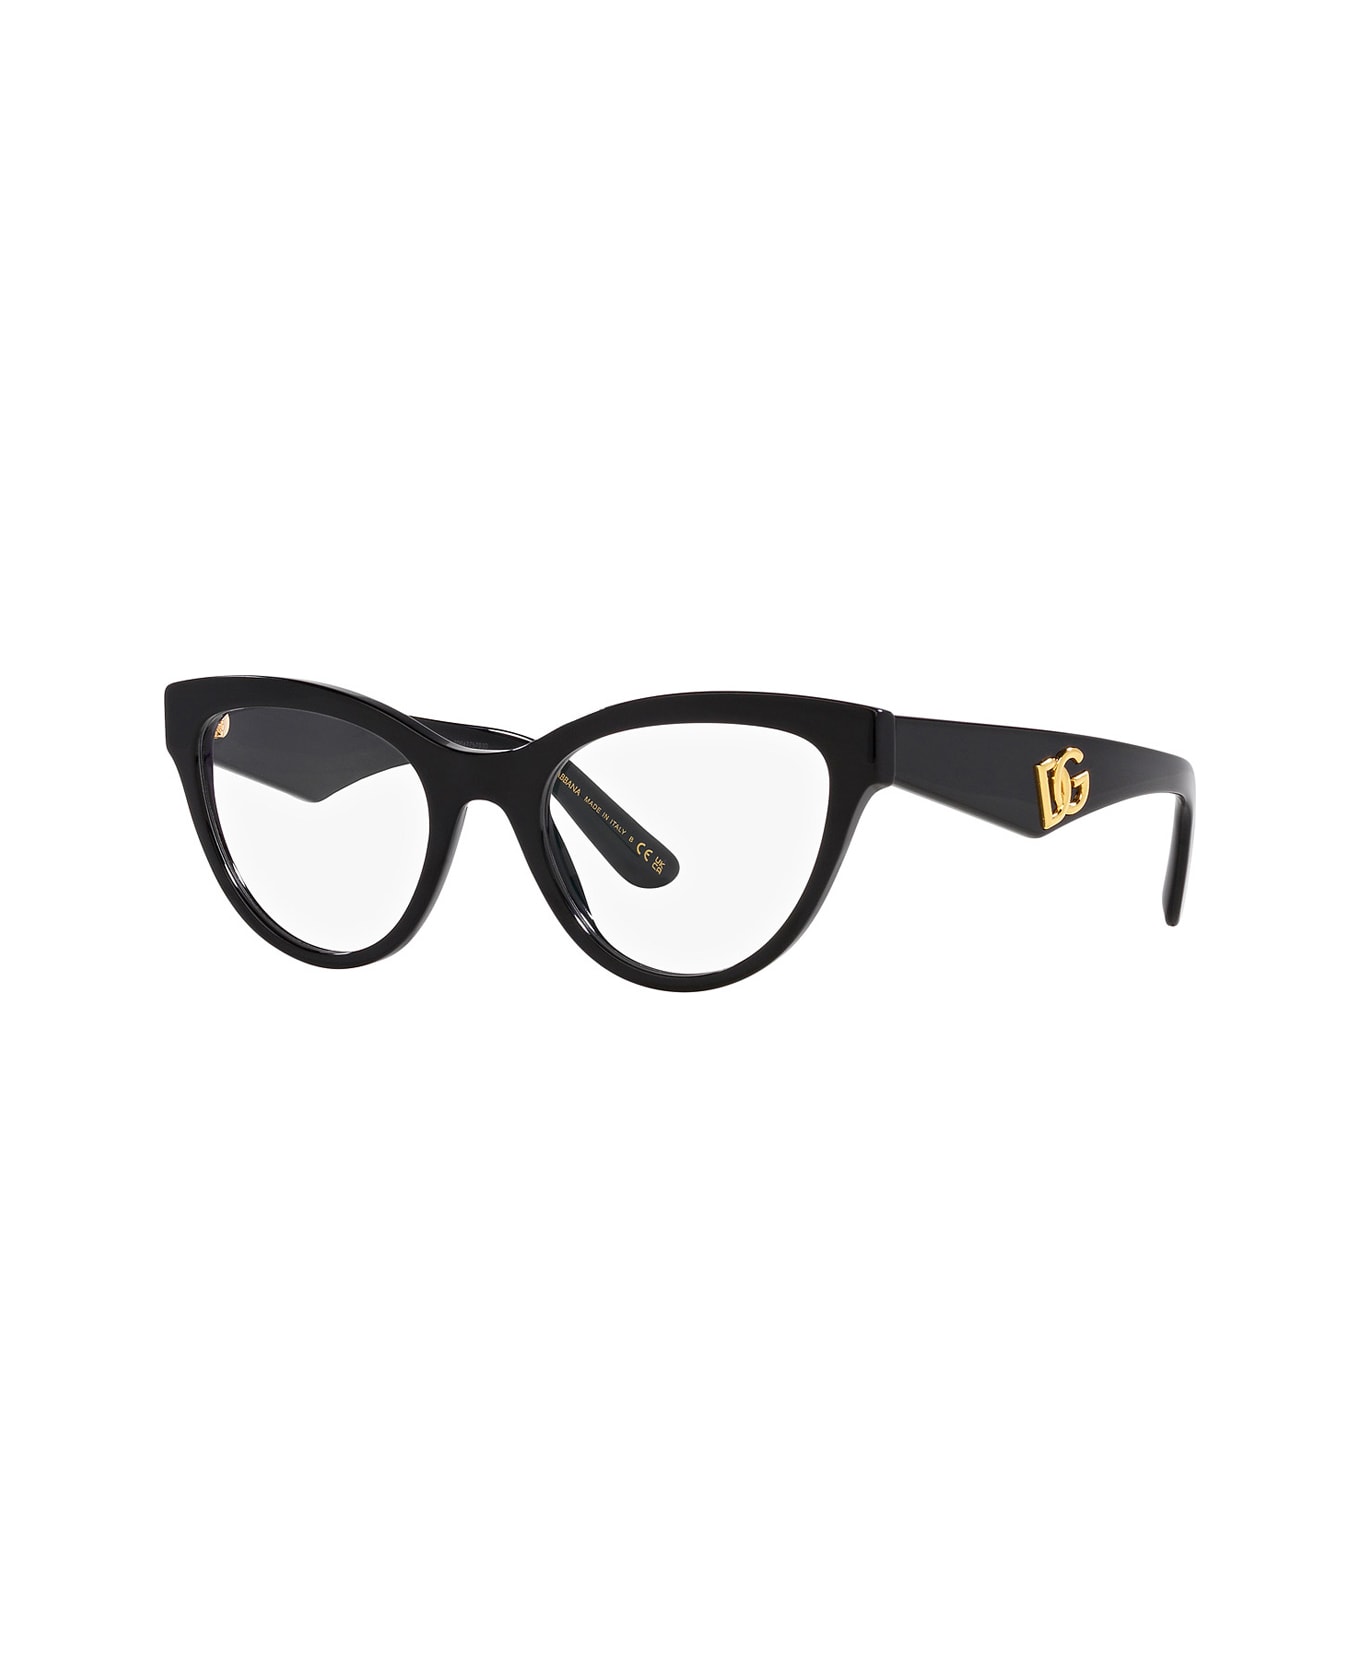 Dolce & Gabbana Eyewear Dg3372 501 Glasses - Nero アイウェア